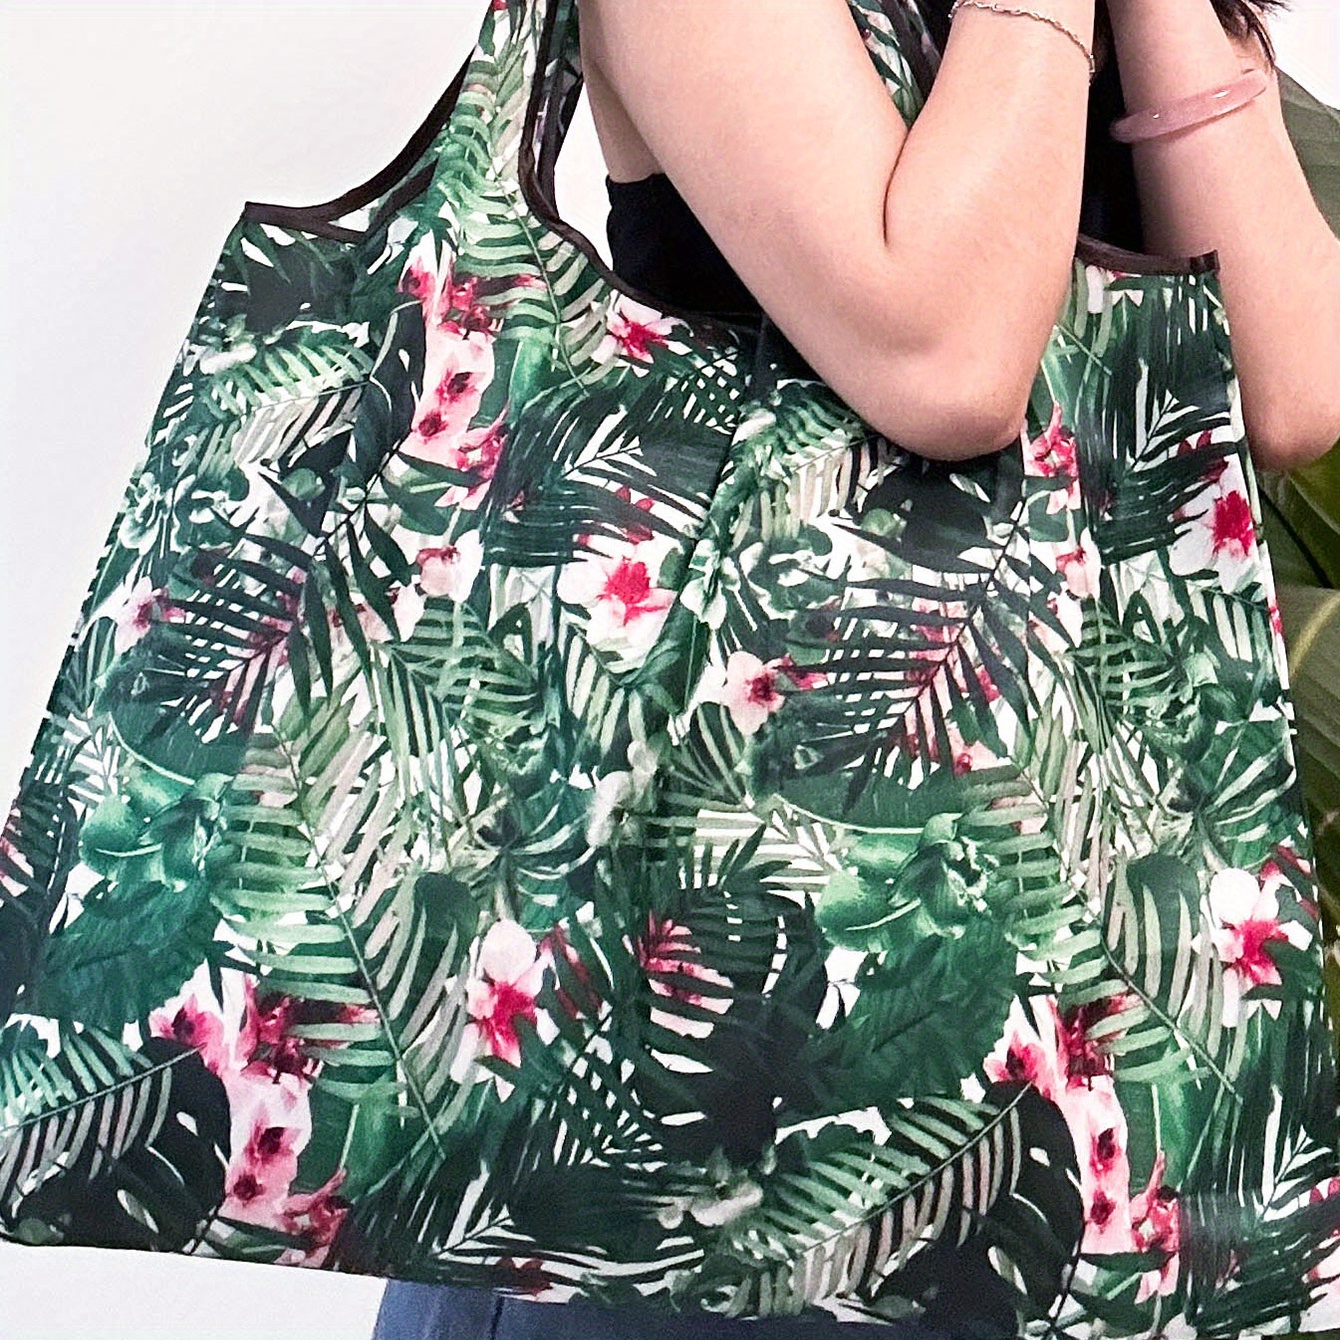 Tropical Foldable Tote Bag - Buy 1 Get 1 Free